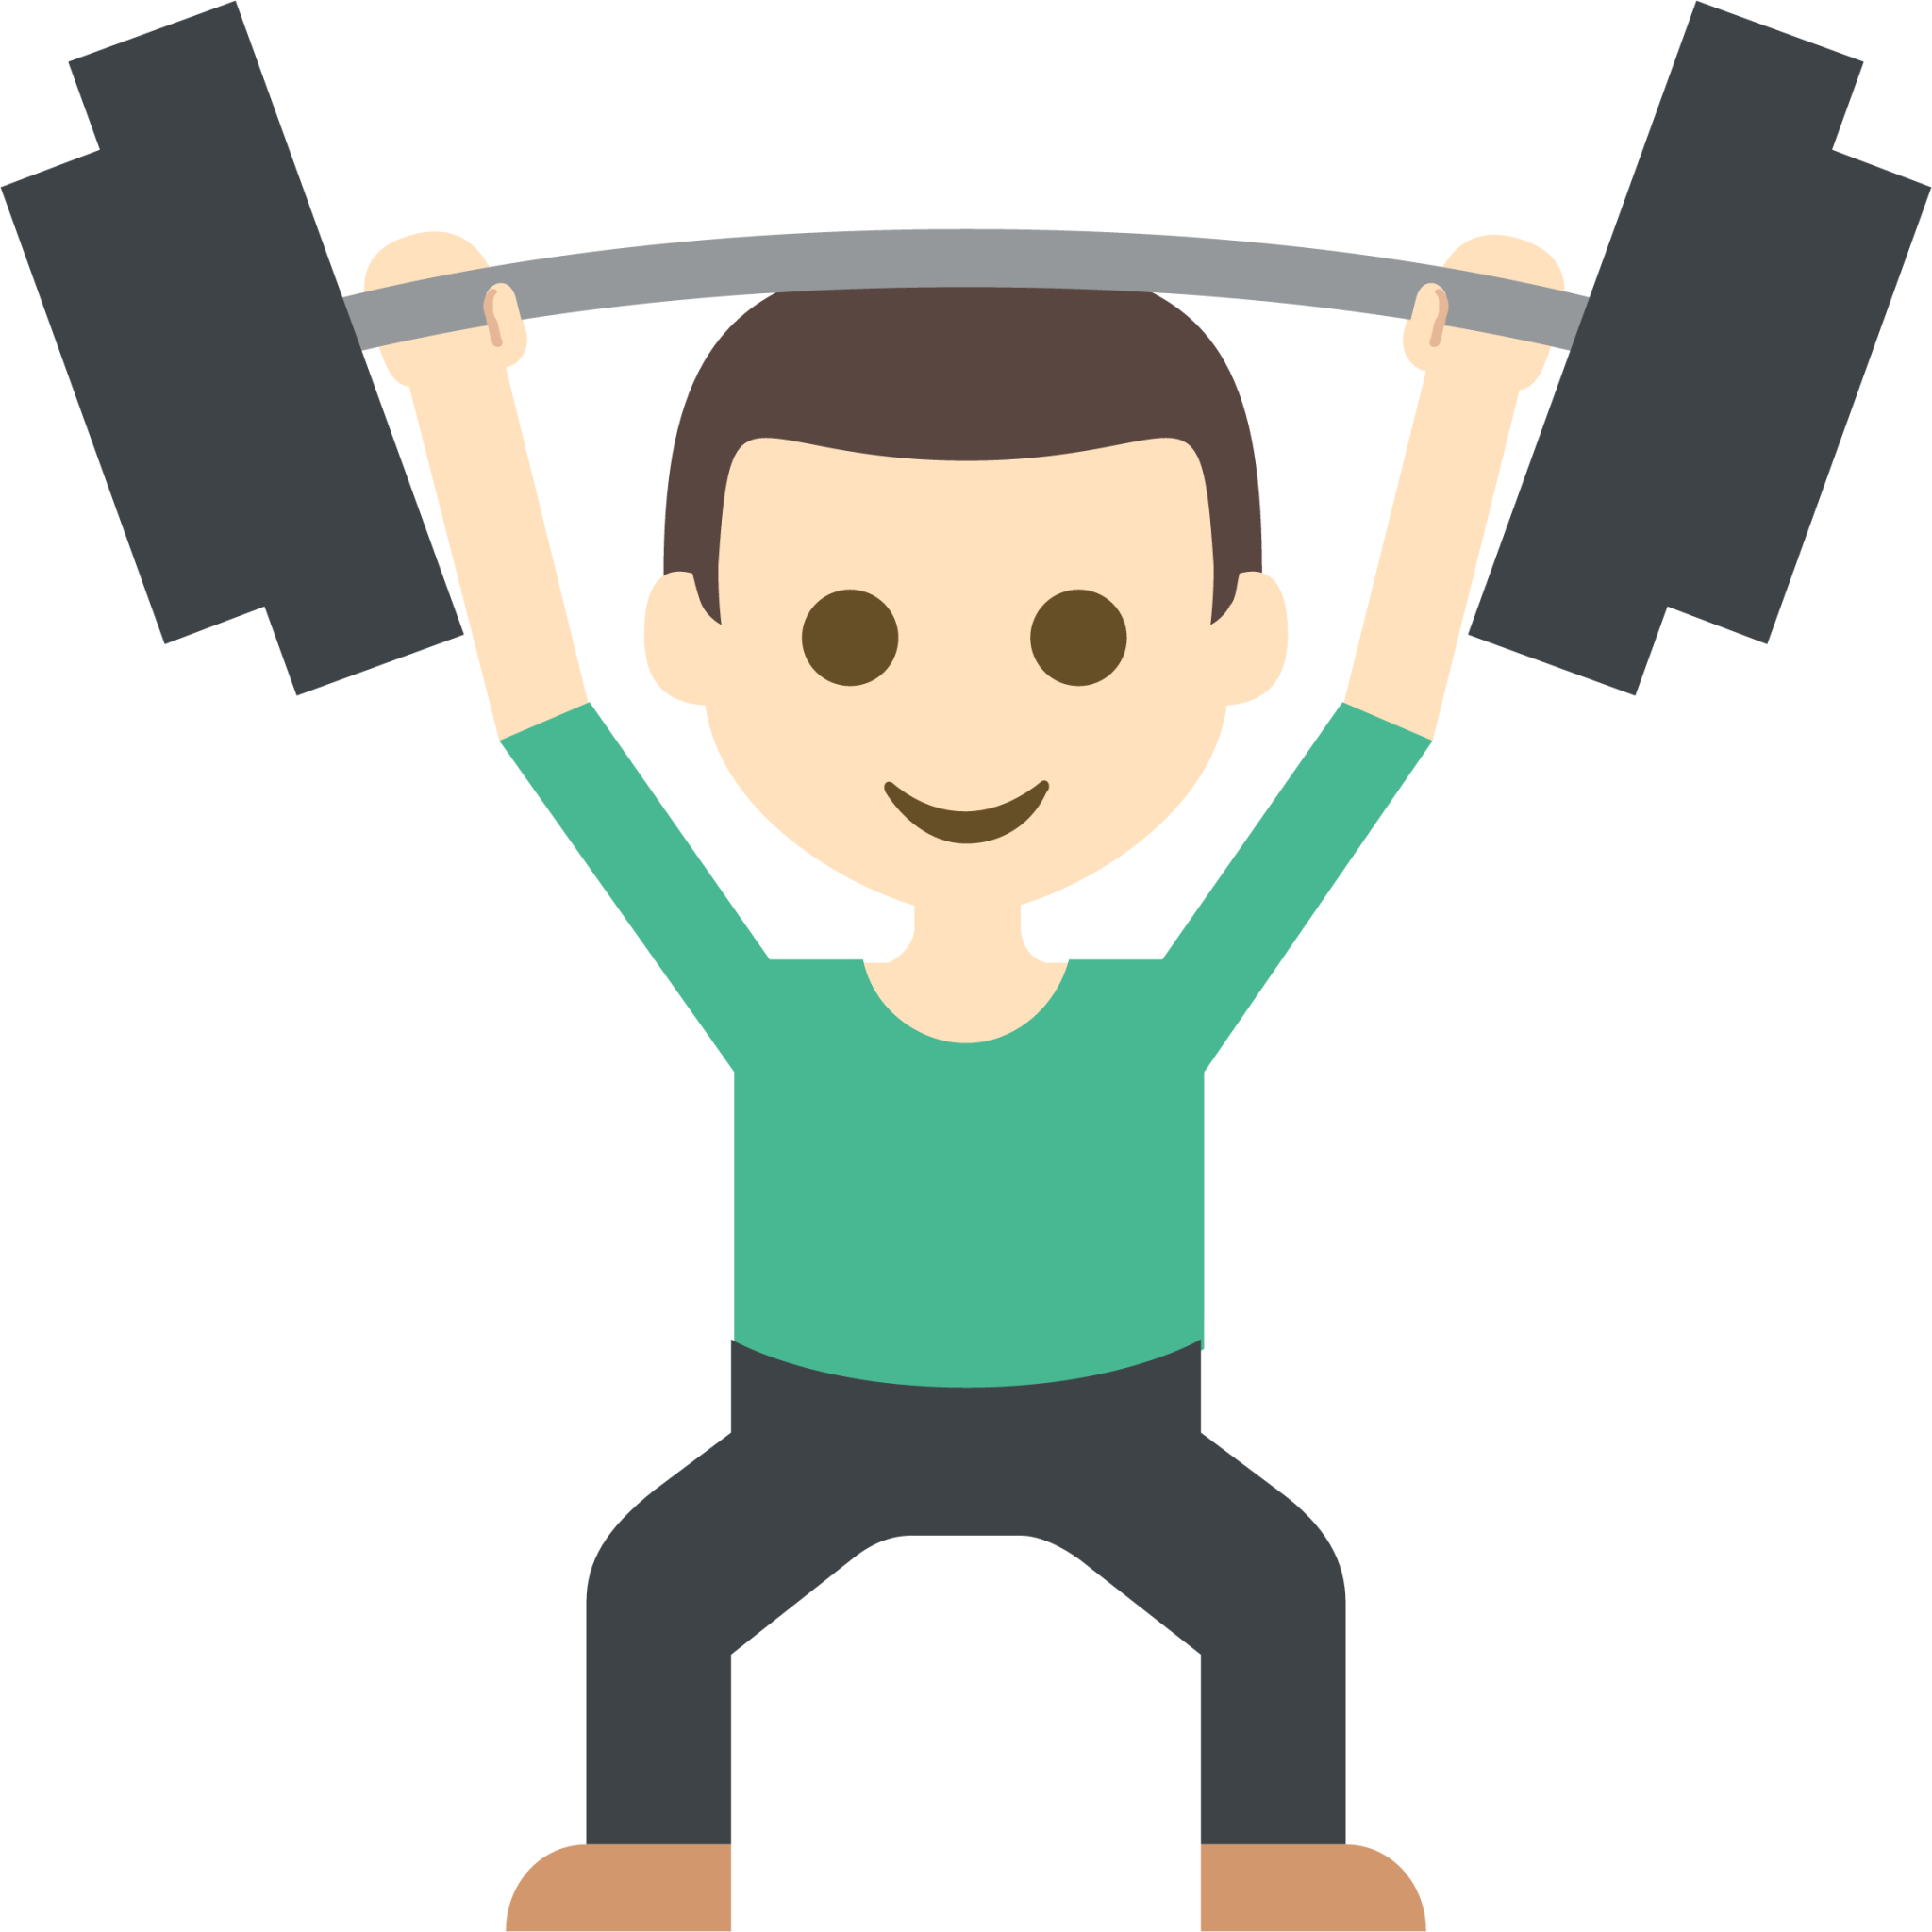 weight lifter tone 1 emoji